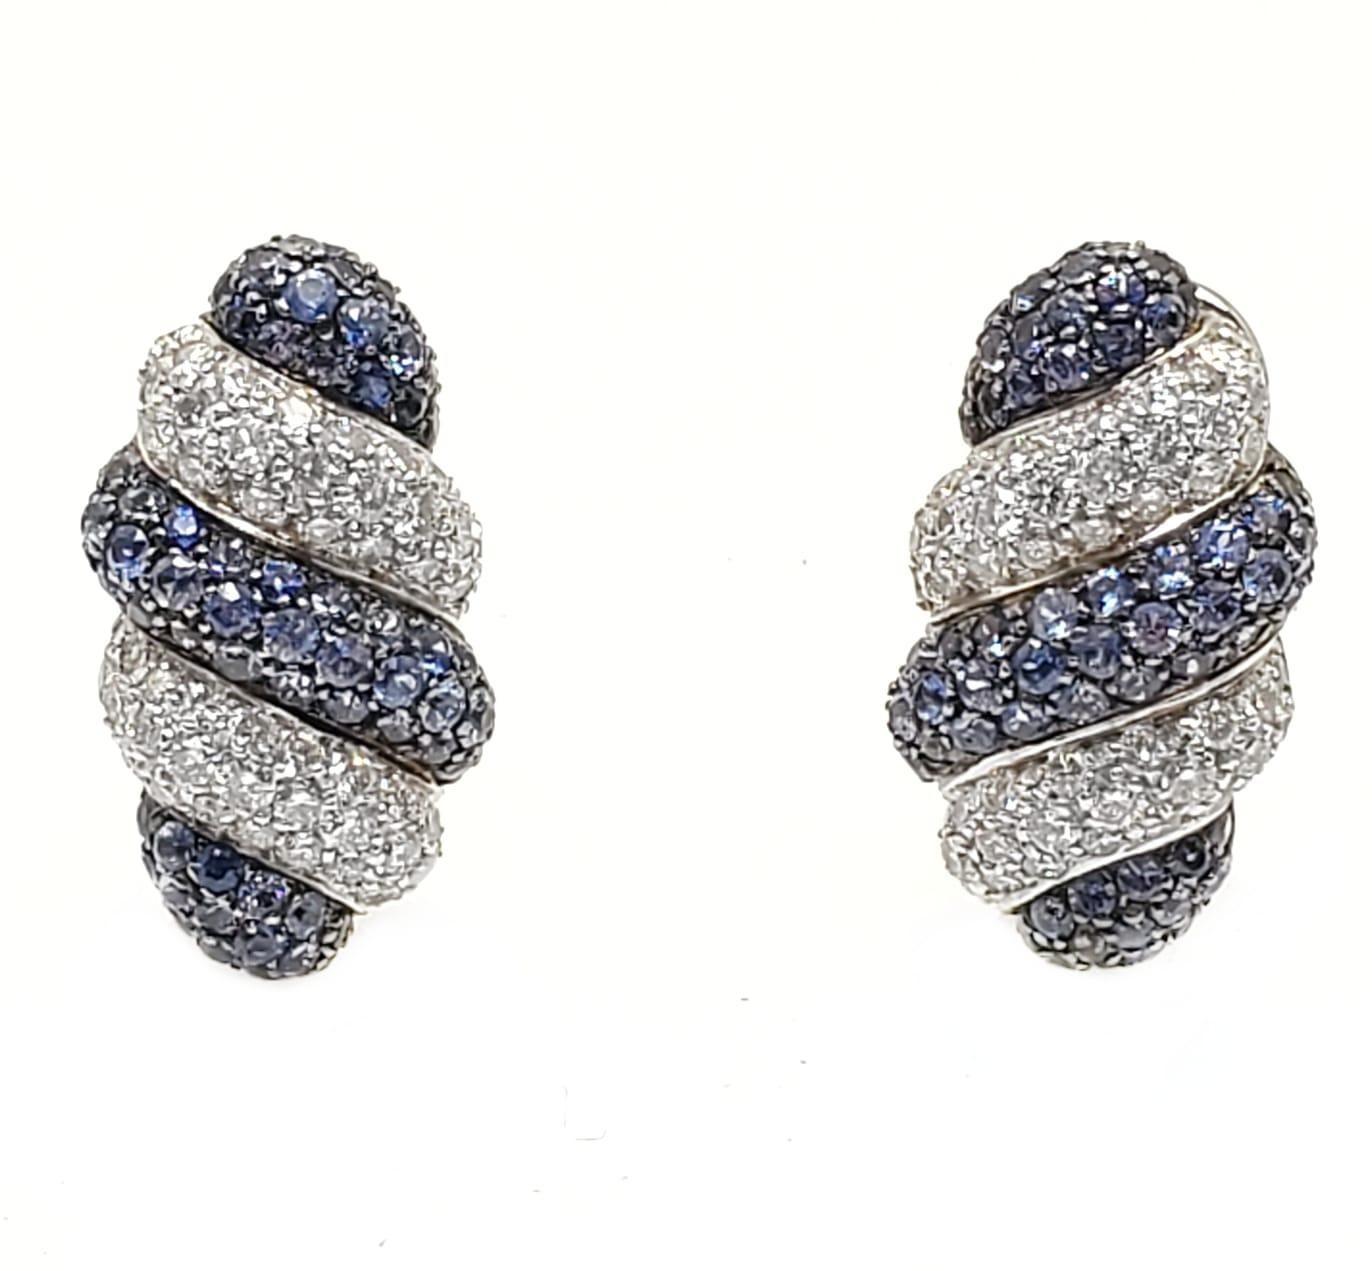 Andreoli Blue Sapphire Diamond 18 Karat White Gold Earrings

 These earrings feature:
- 2.44 Carat Diamond
- 4.19 Carat Blue Sapphire
- 19.90 Gram 18K White Gold
- Made In Italy